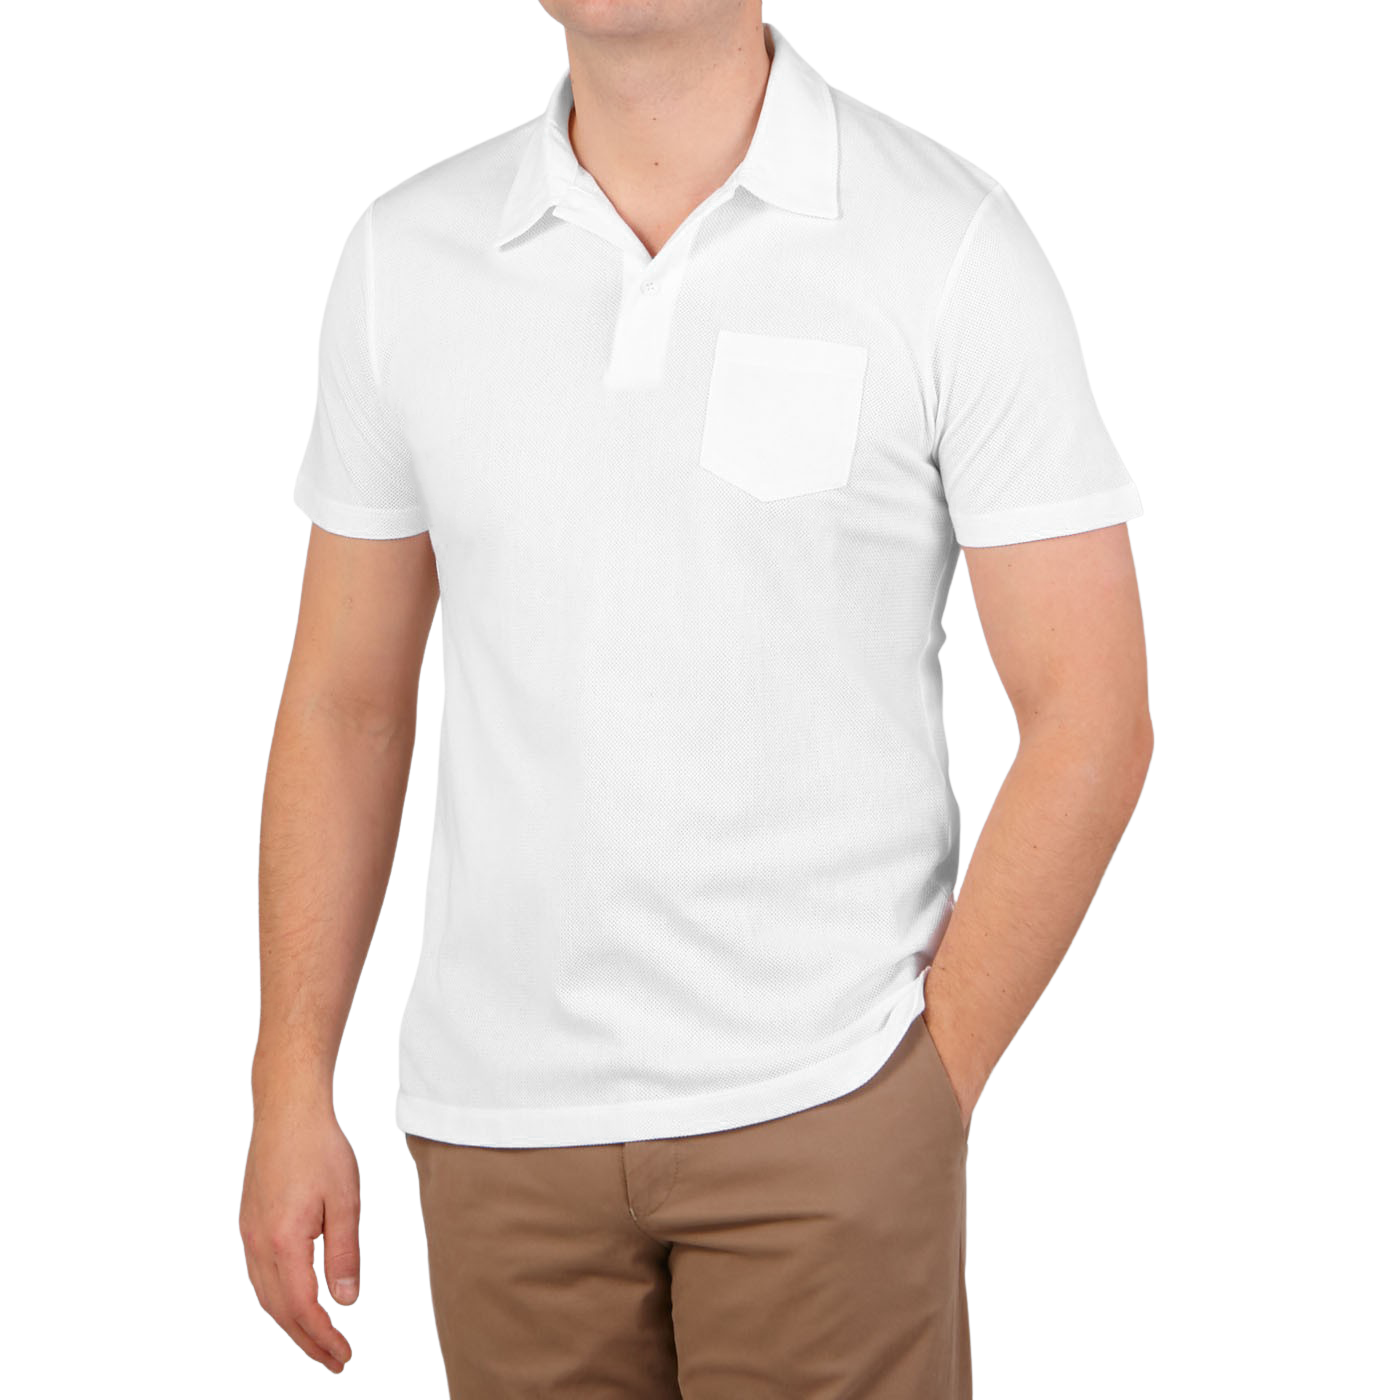 Sunspel White Cotton Riviera Polo Shirt Front1